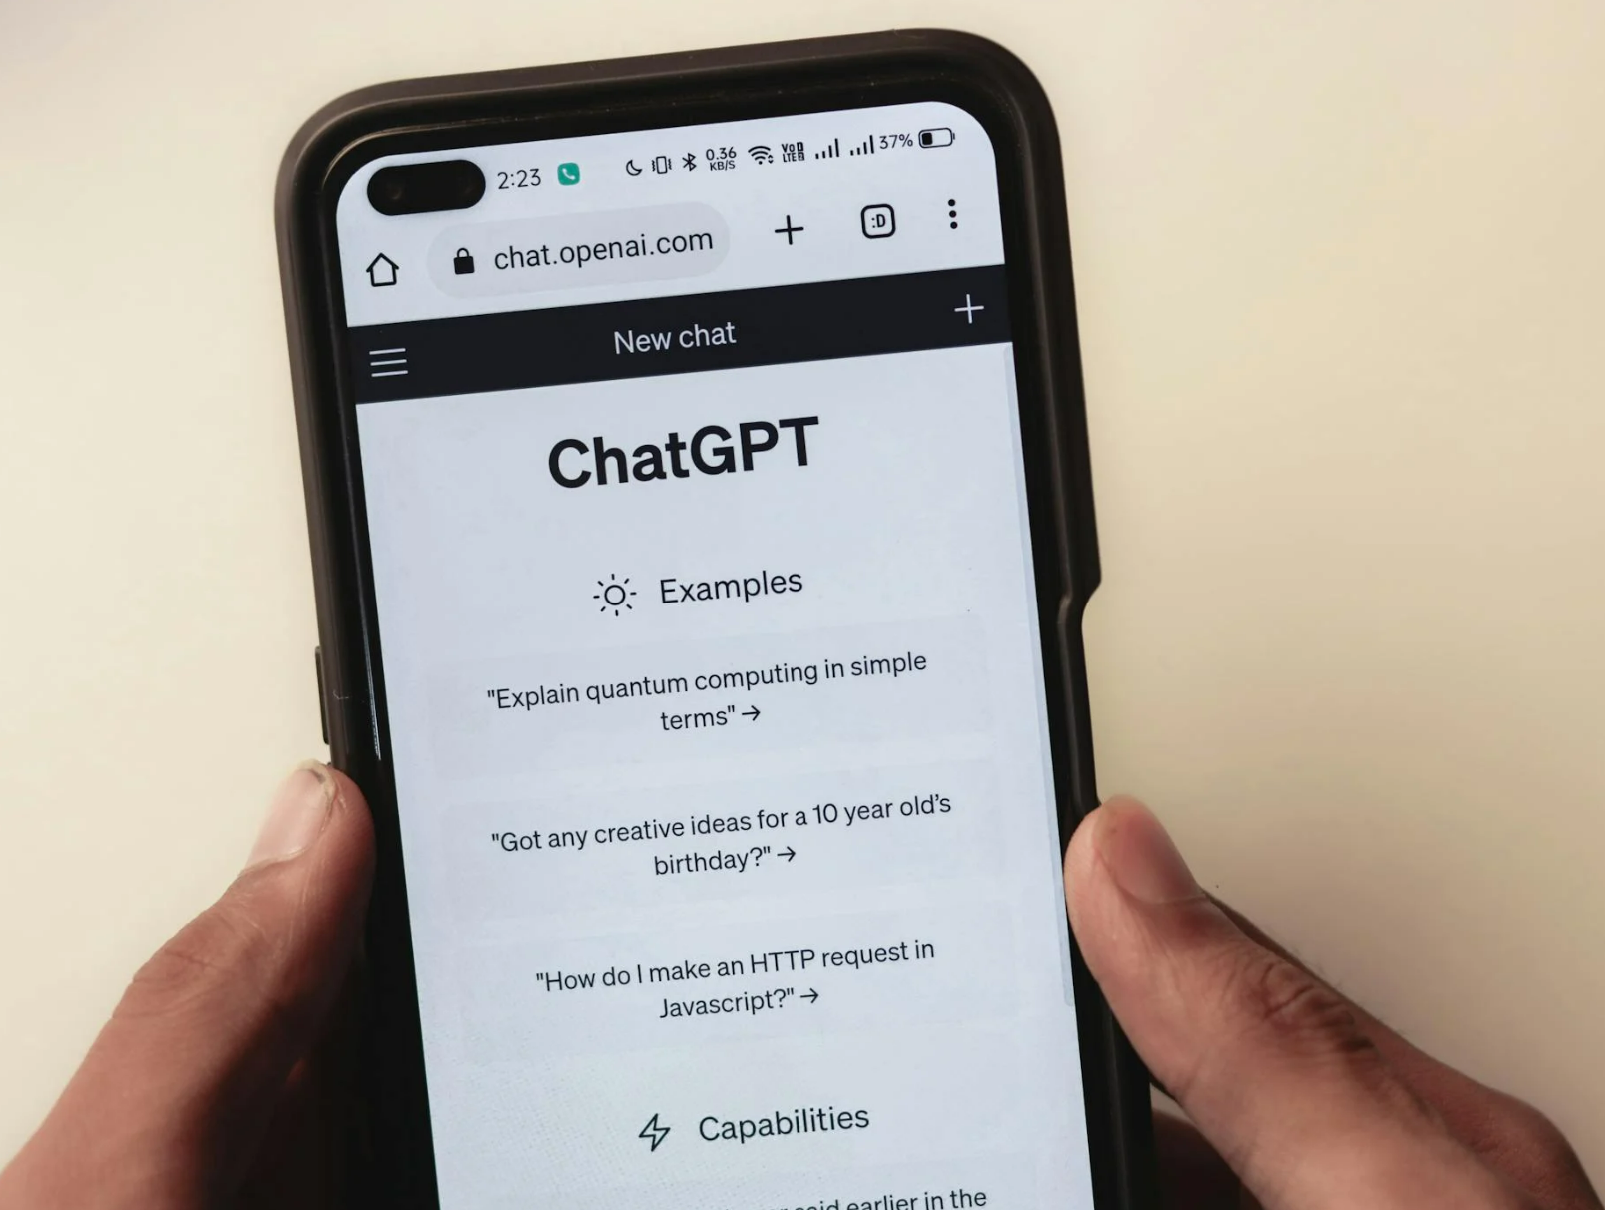 ChatGPT capabilities